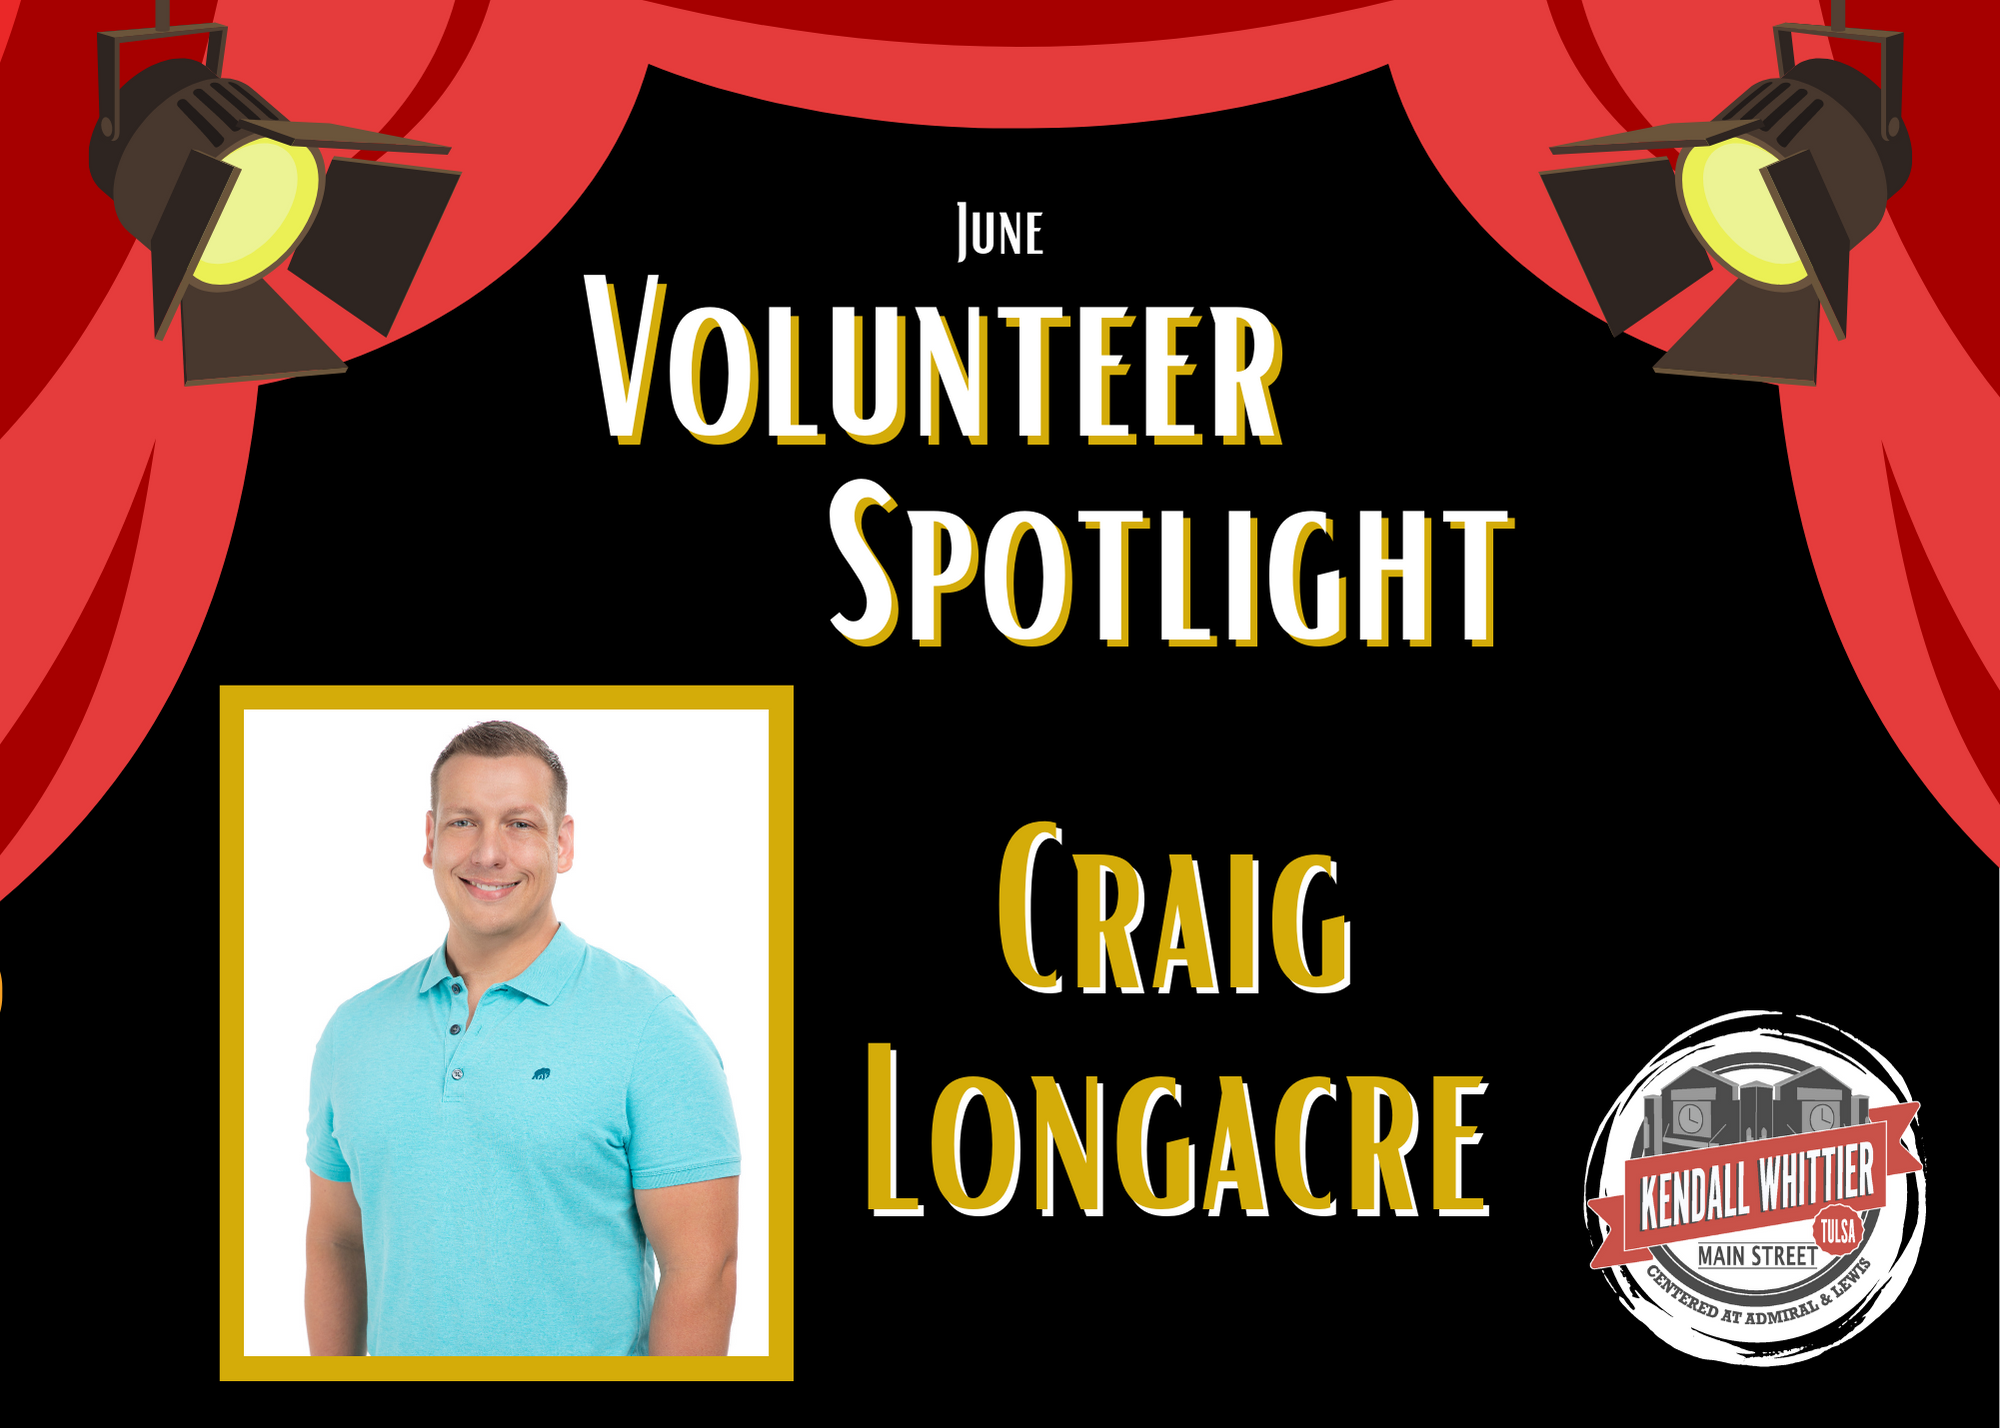 June Volunteer Spotlight: Craig Longacre